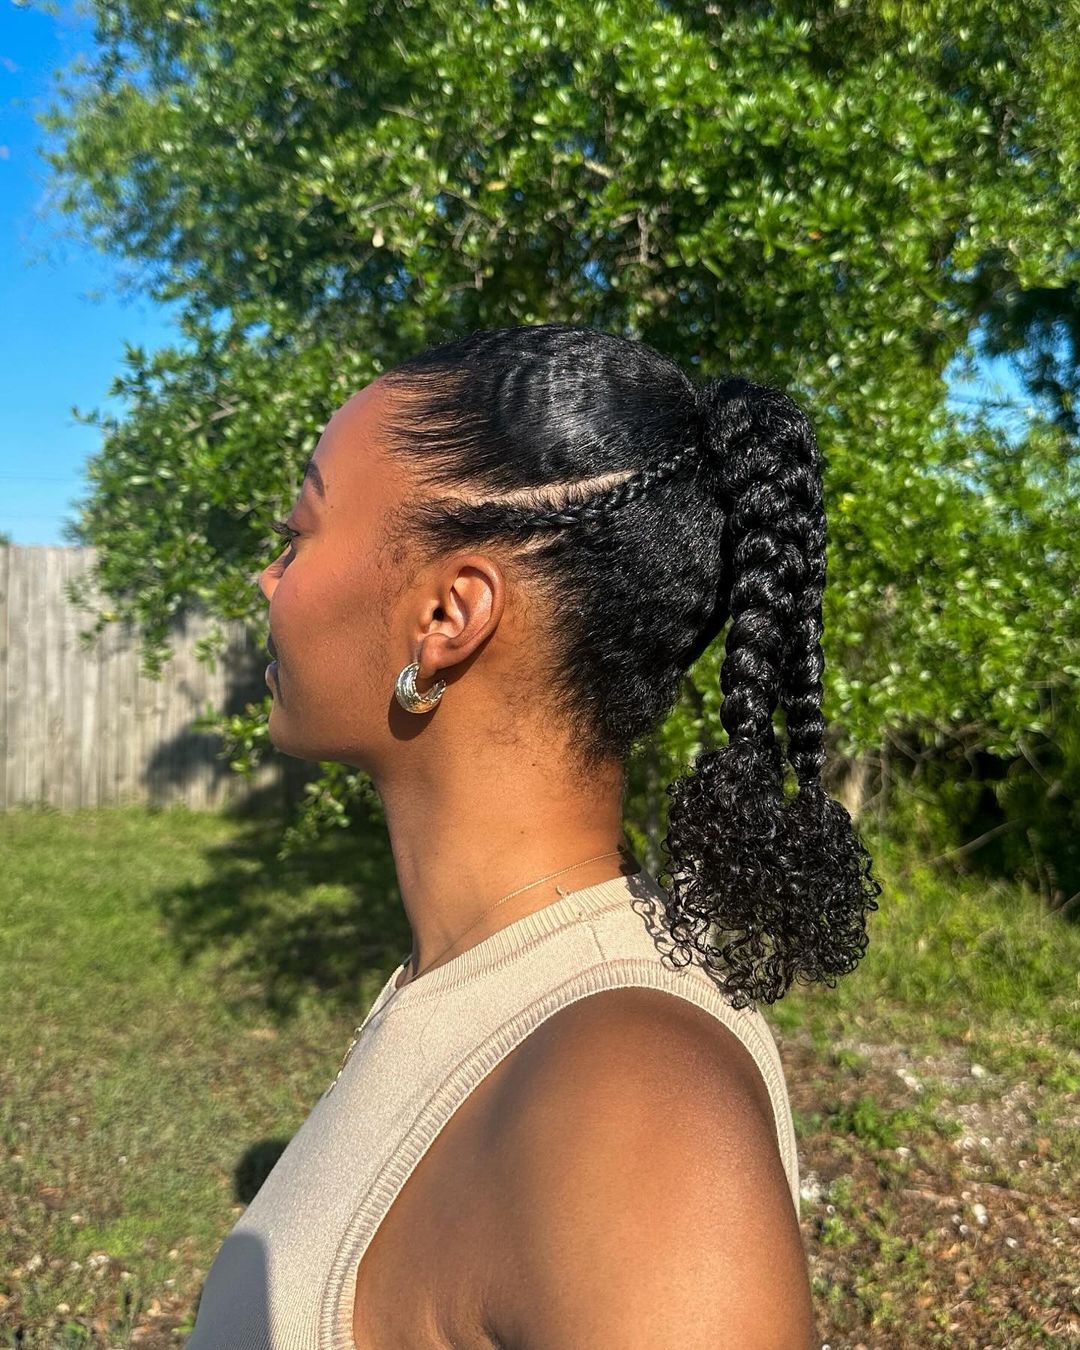 braided ponytail